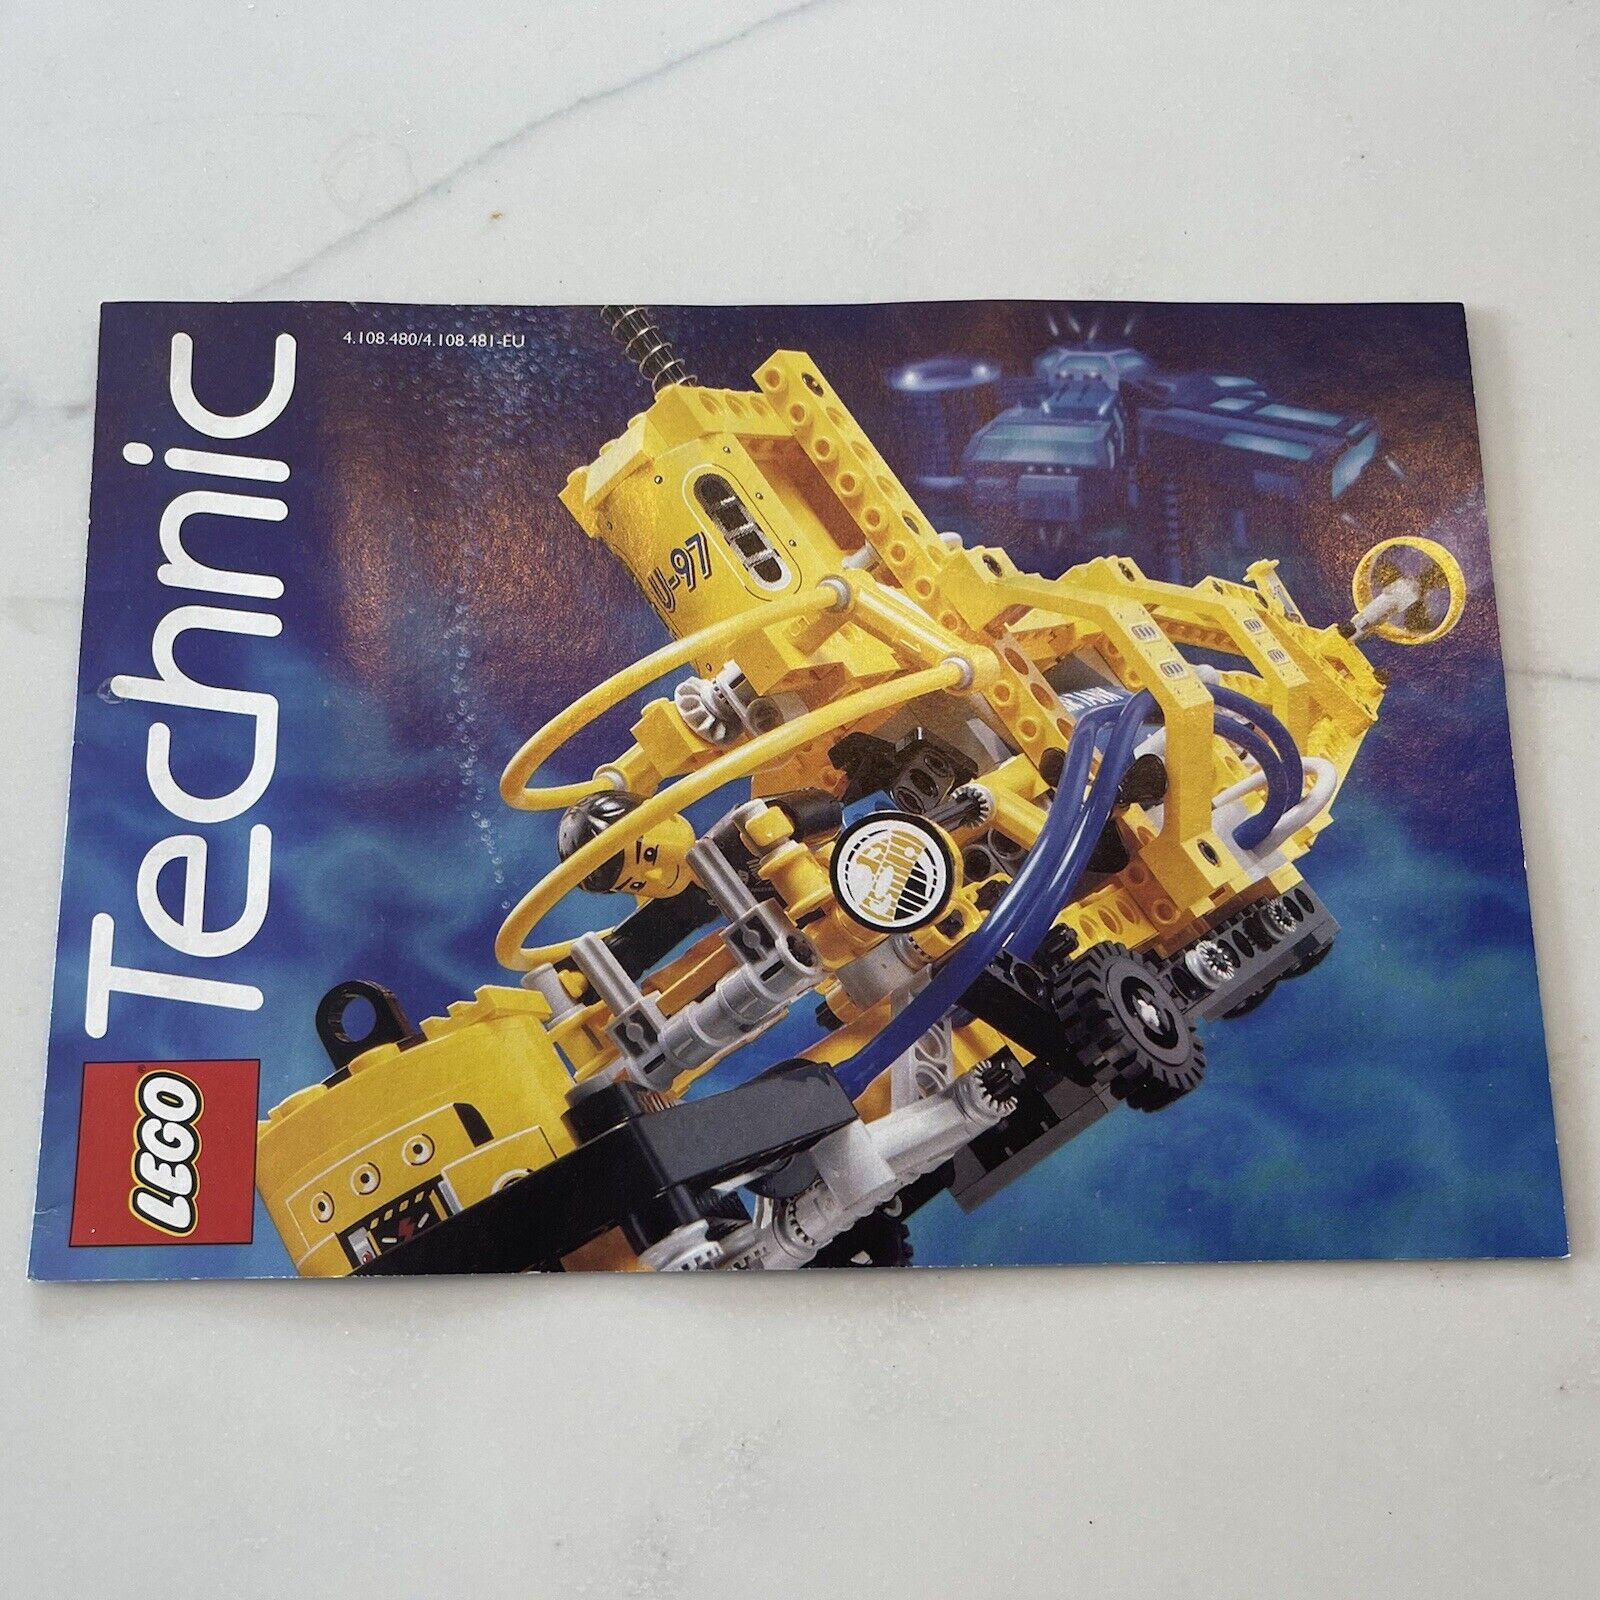 Lego Technic Catalog 1997 Medium Technic European 4.108.480/-481